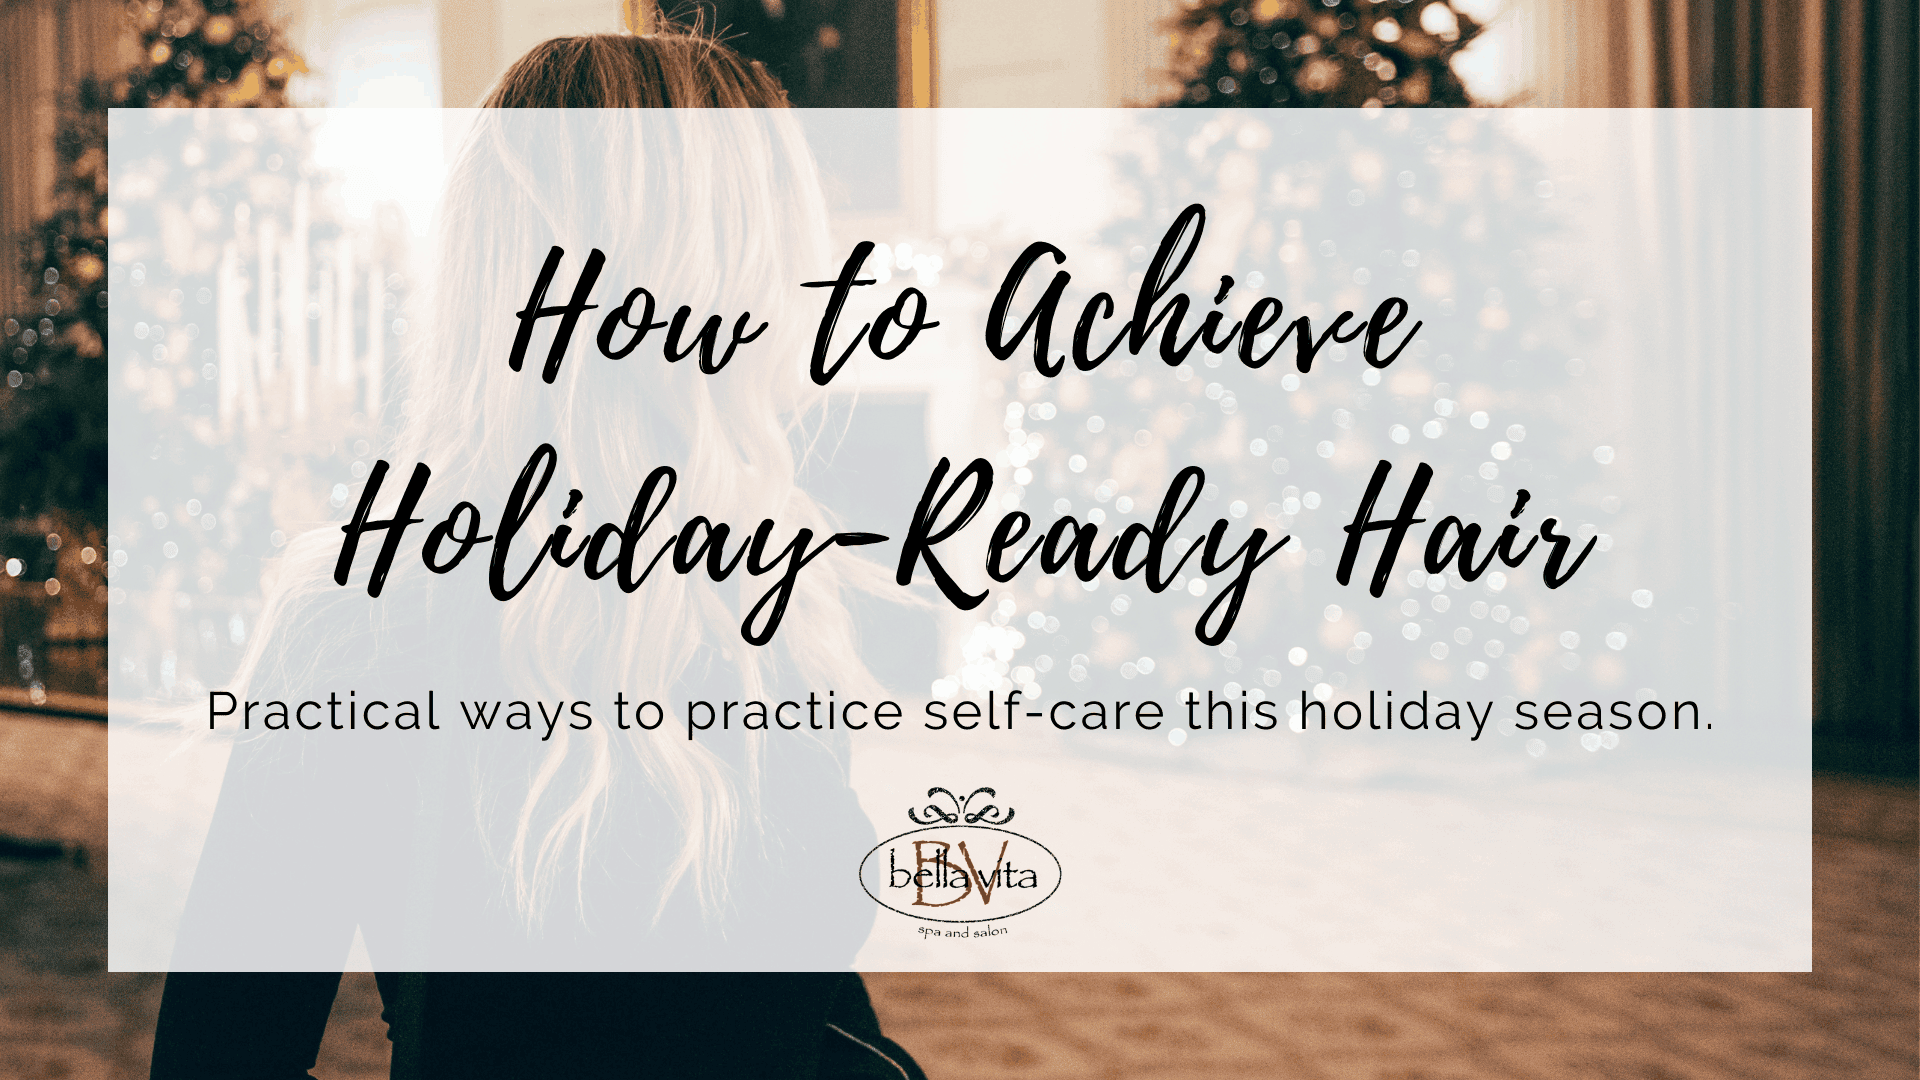 Holiday-Ready Hair